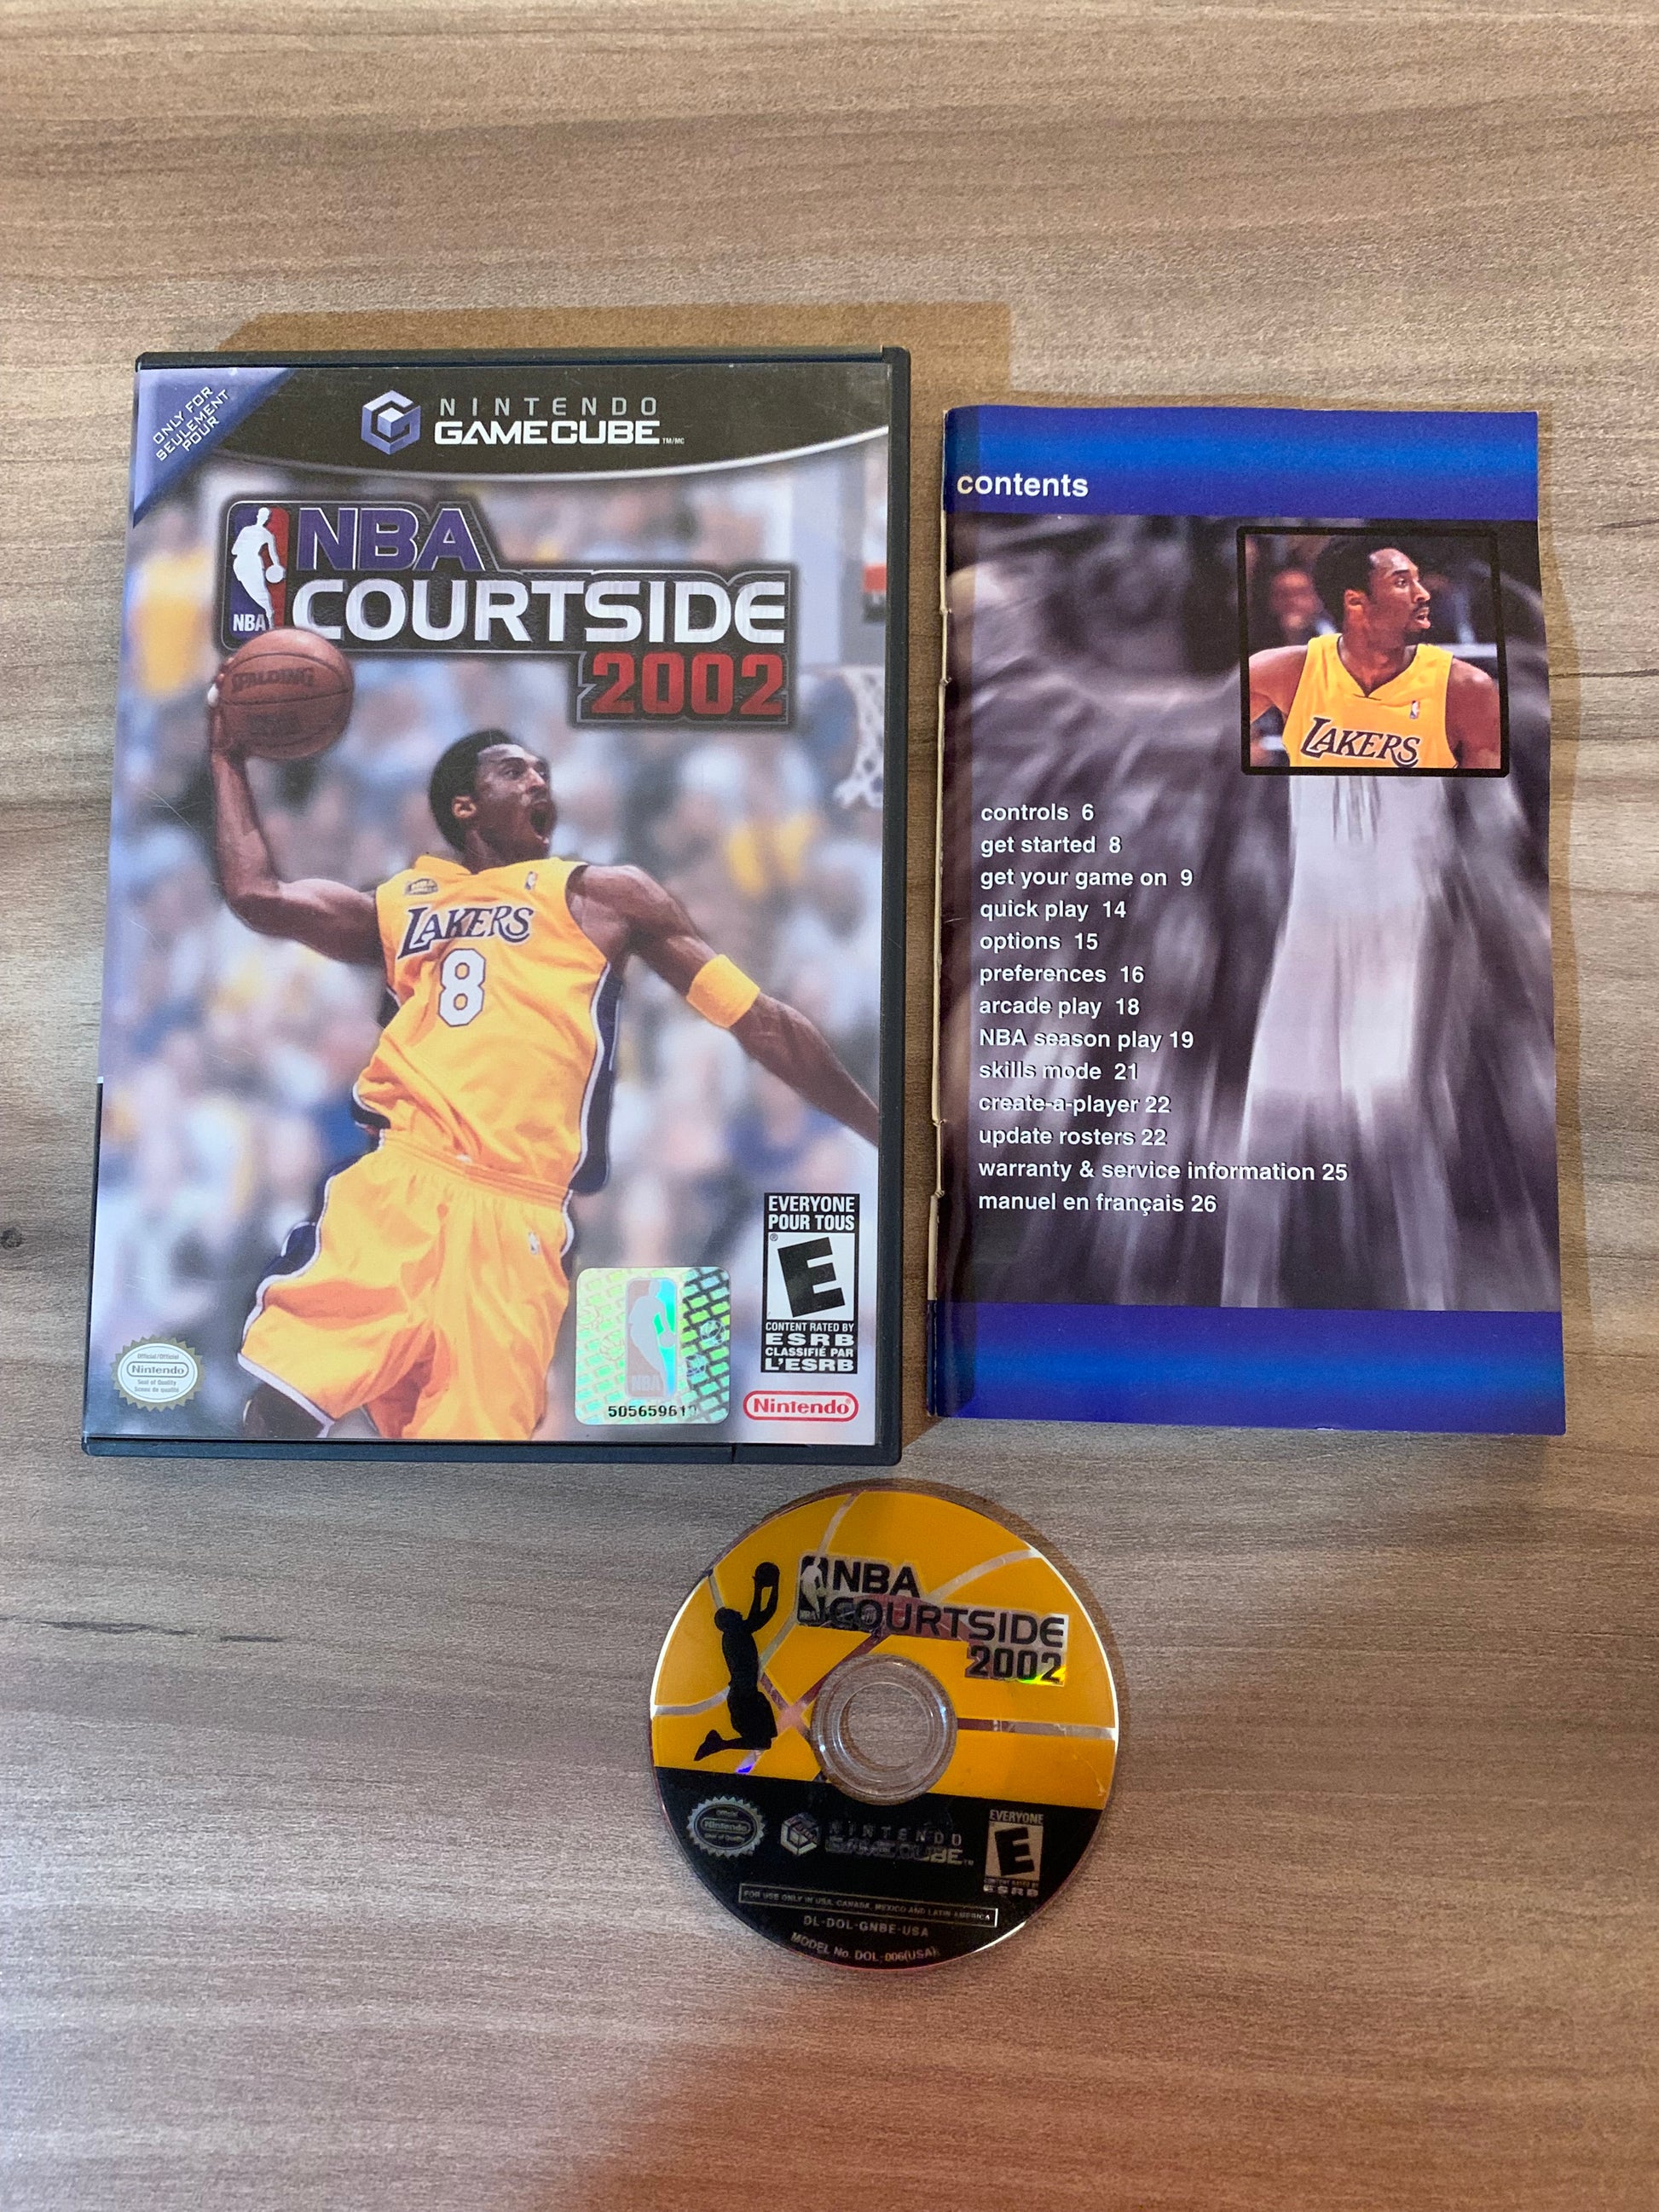 PiXEL-RETRO.COM : NINTENDO GAMECUBE COMPLETE CIB BOX MANUAL GAME NTSC NBA COURSIDE 2002